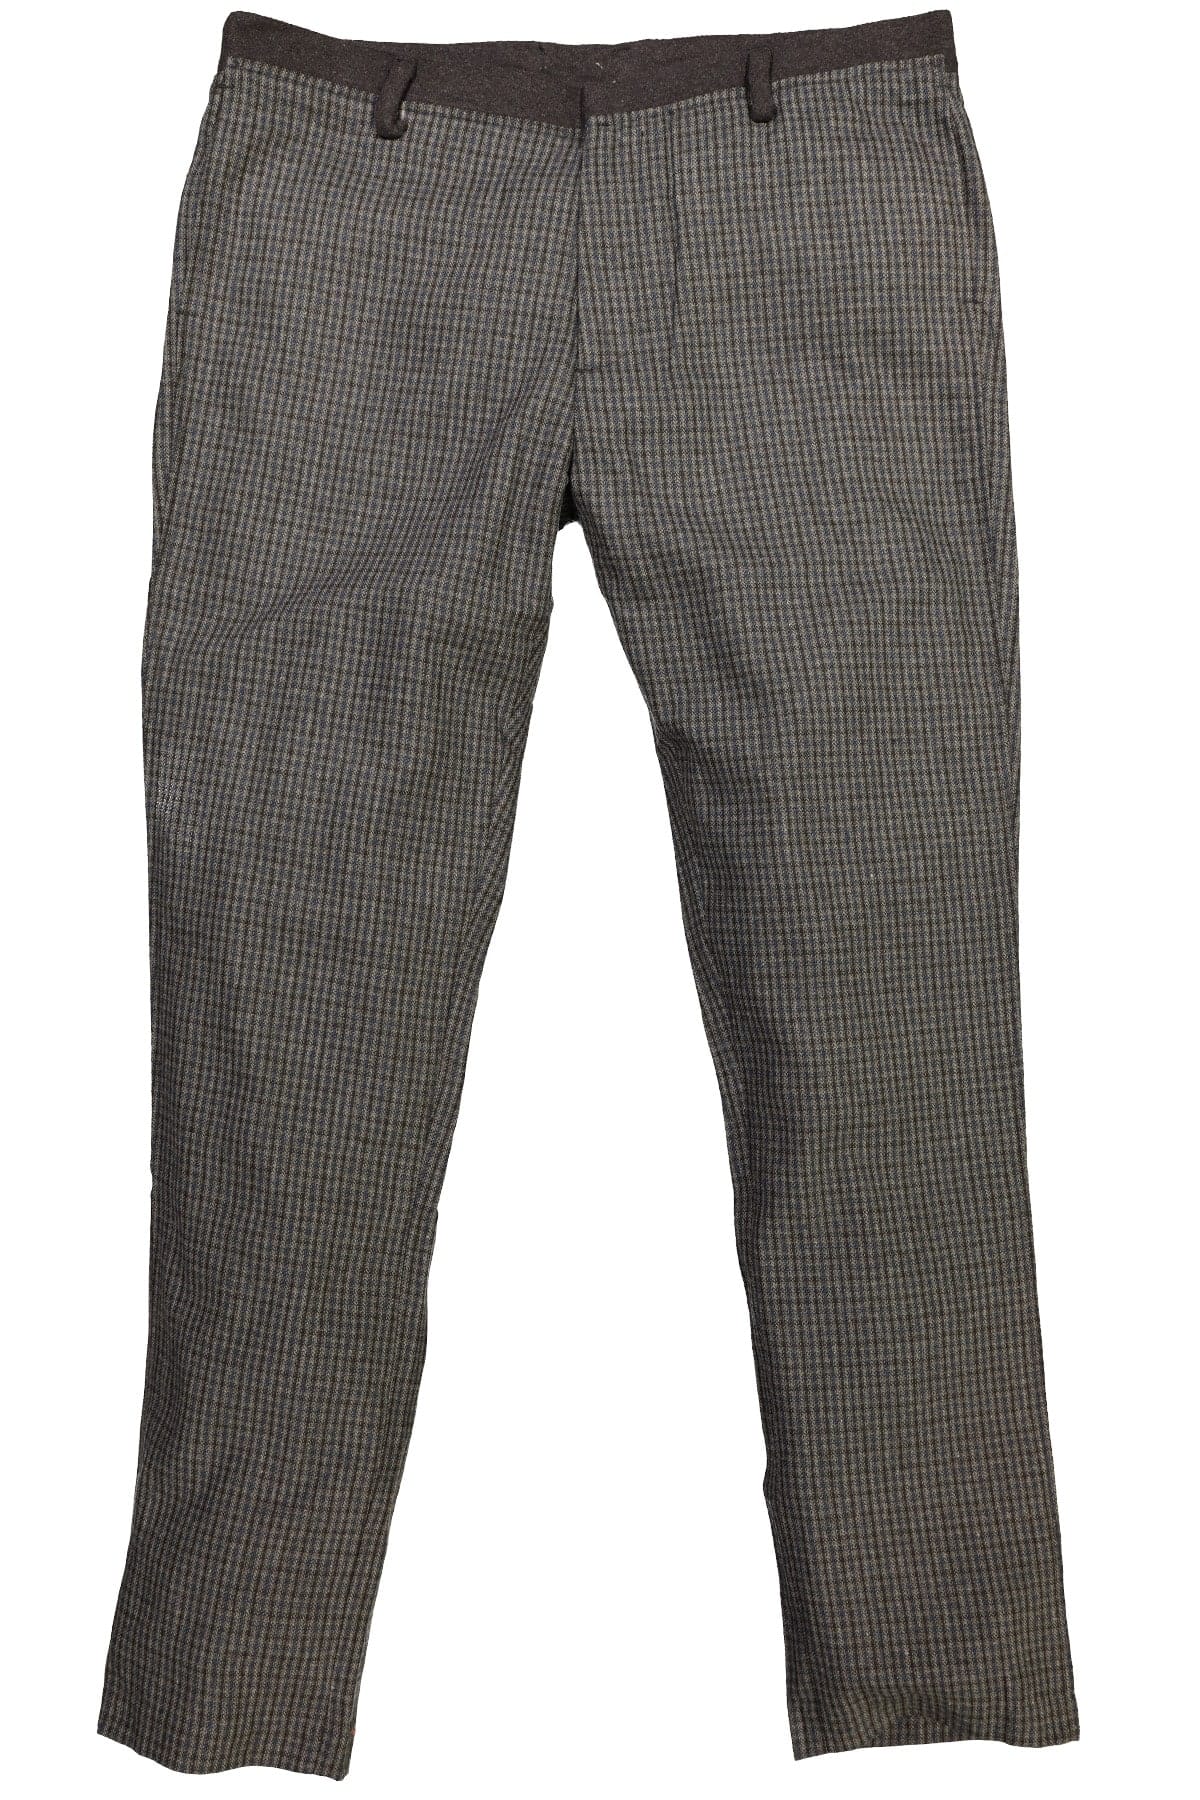 People Trend Charcoal, Navy & Light Grey Tweed Pant